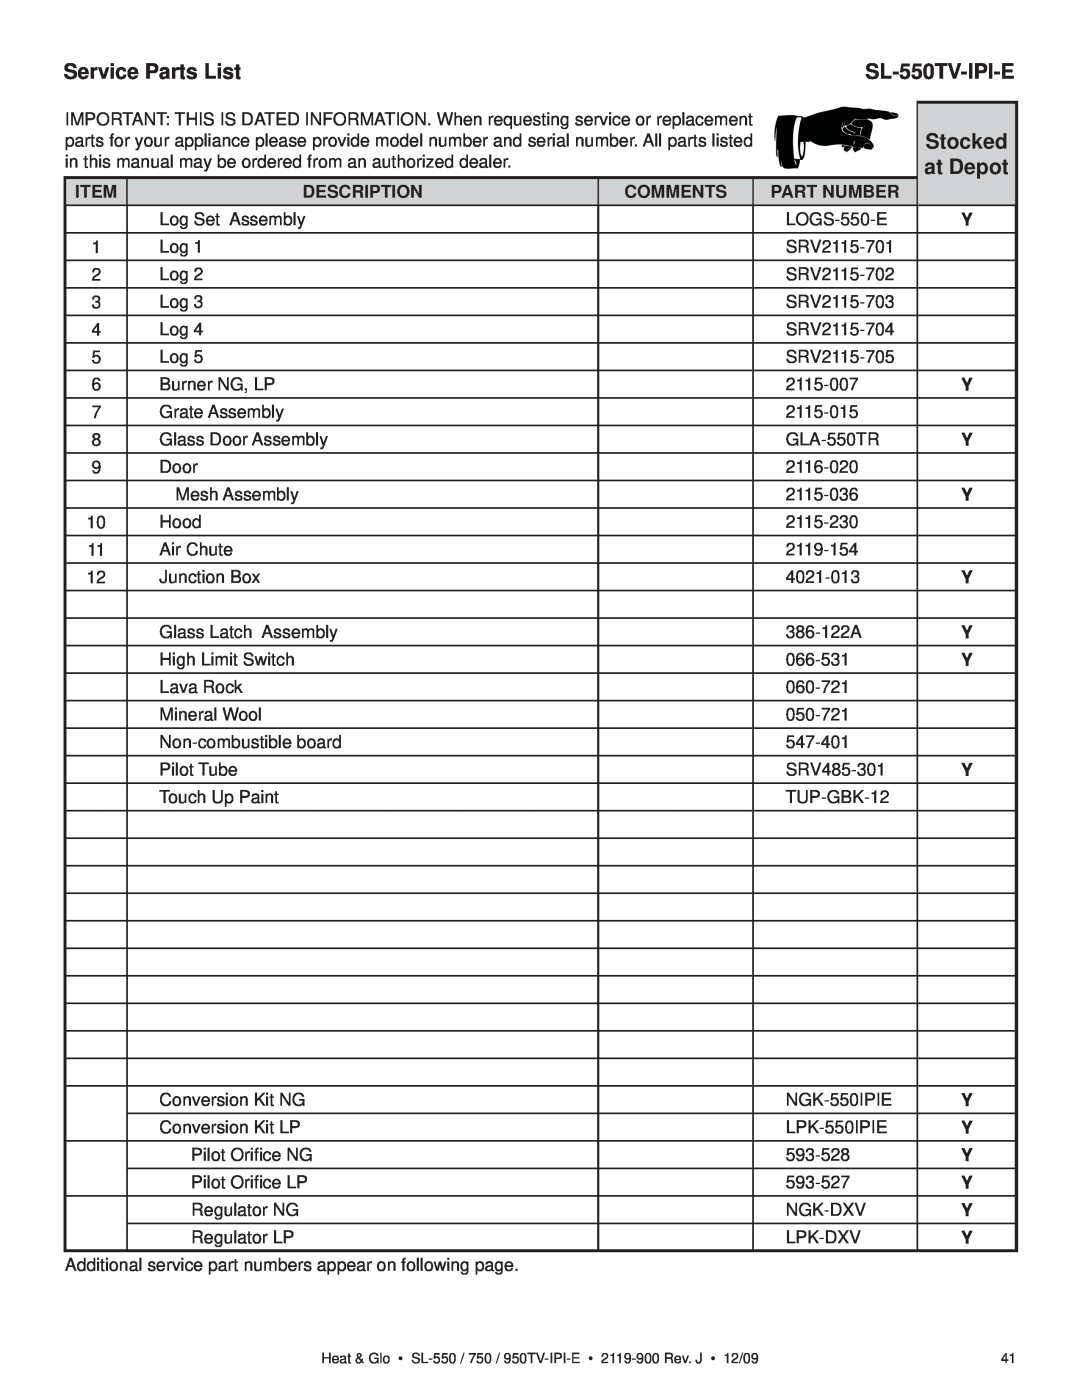 Heat & Glo LifeStyle SL-550TV-IPI-E owner manual Service Parts List, at Depot, Stocked, Description, Comments, Part Number 